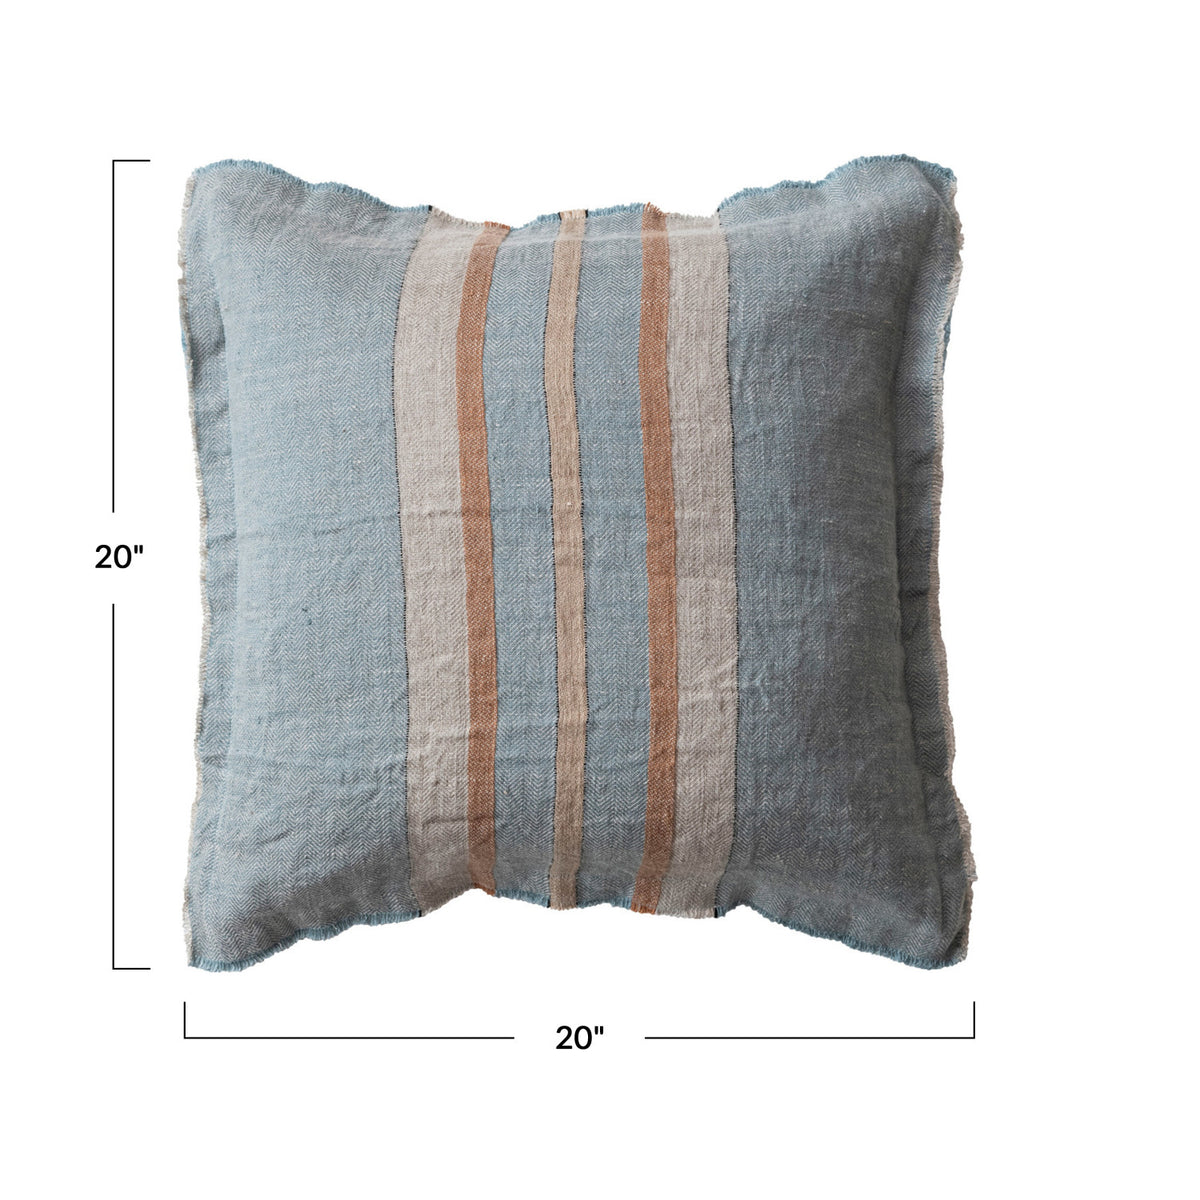 20"S Woven Linen Pillow w/Stripes